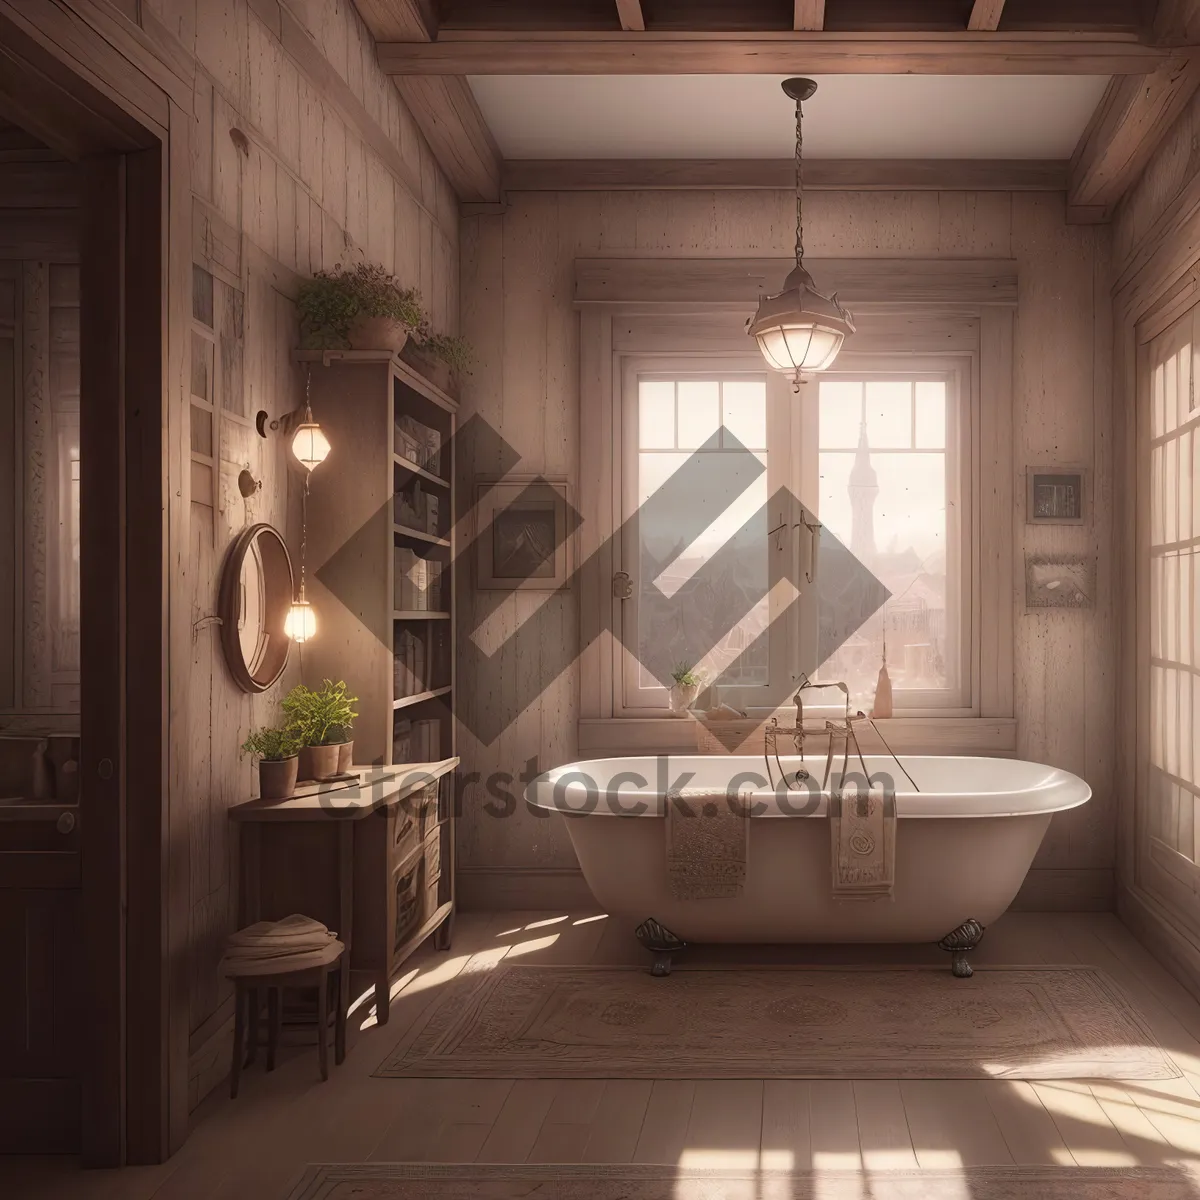 Picture of Elegant Modern Bathroom Interior with Stylish Vessel Tub